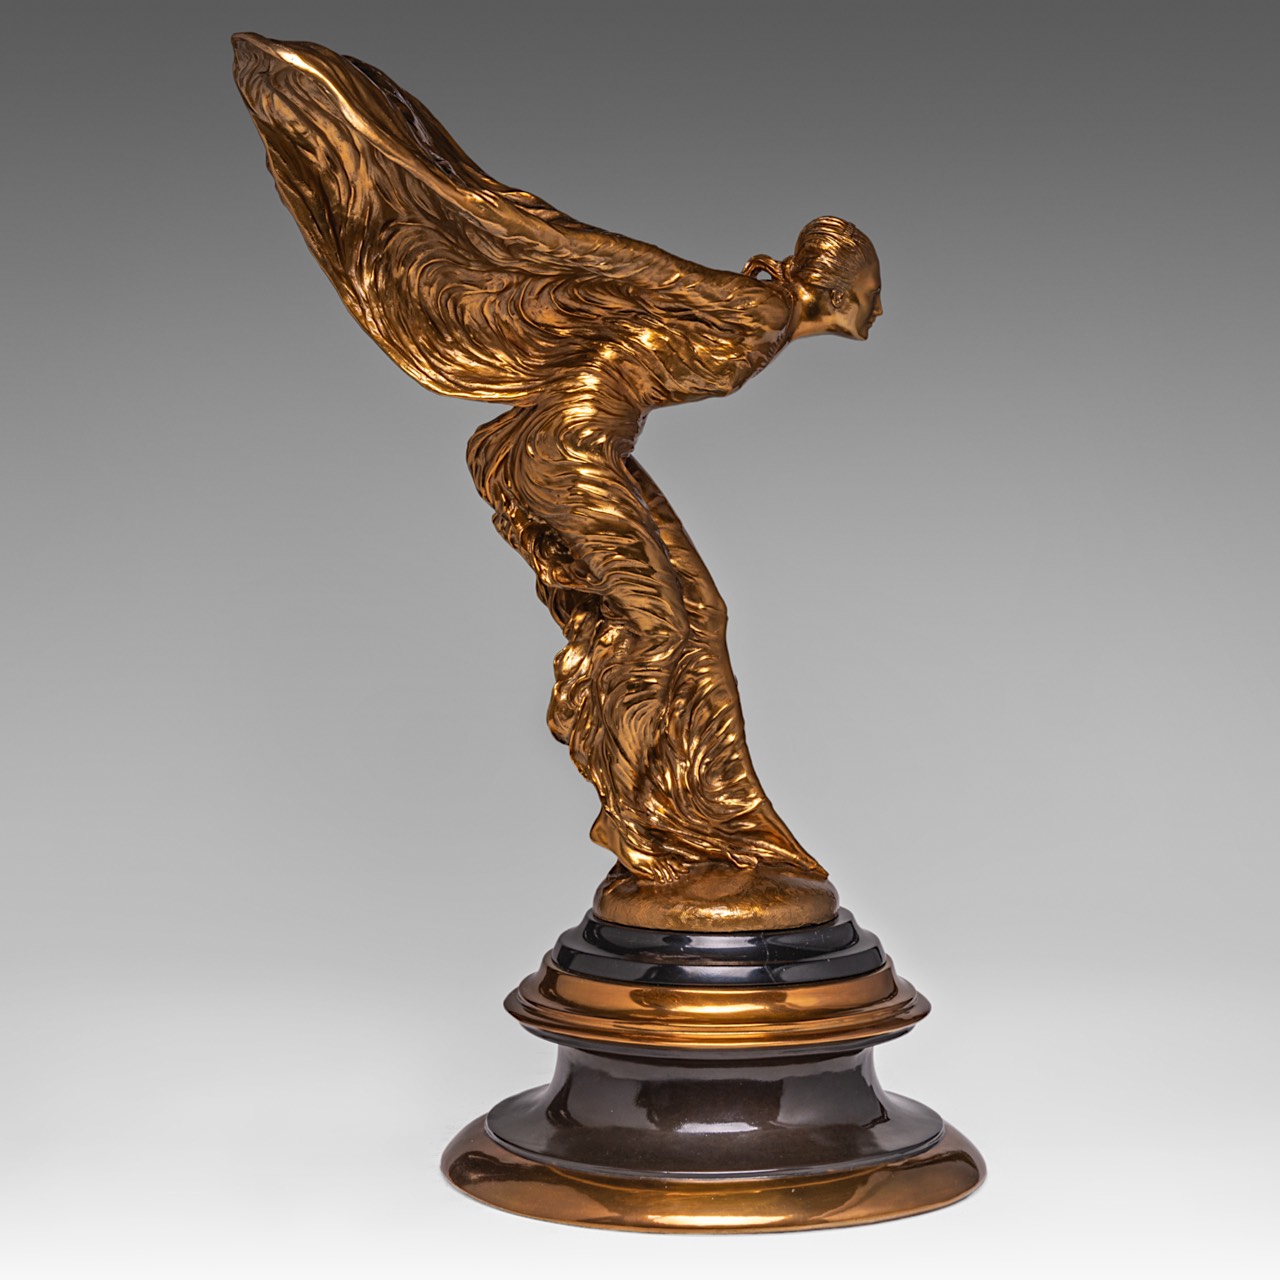 Charles Sykes (1875-1950), gilt bronze sculpture of the 'Spirit of Ecstasy', Rolls-Royce, H 69 cm - Image 13 of 14